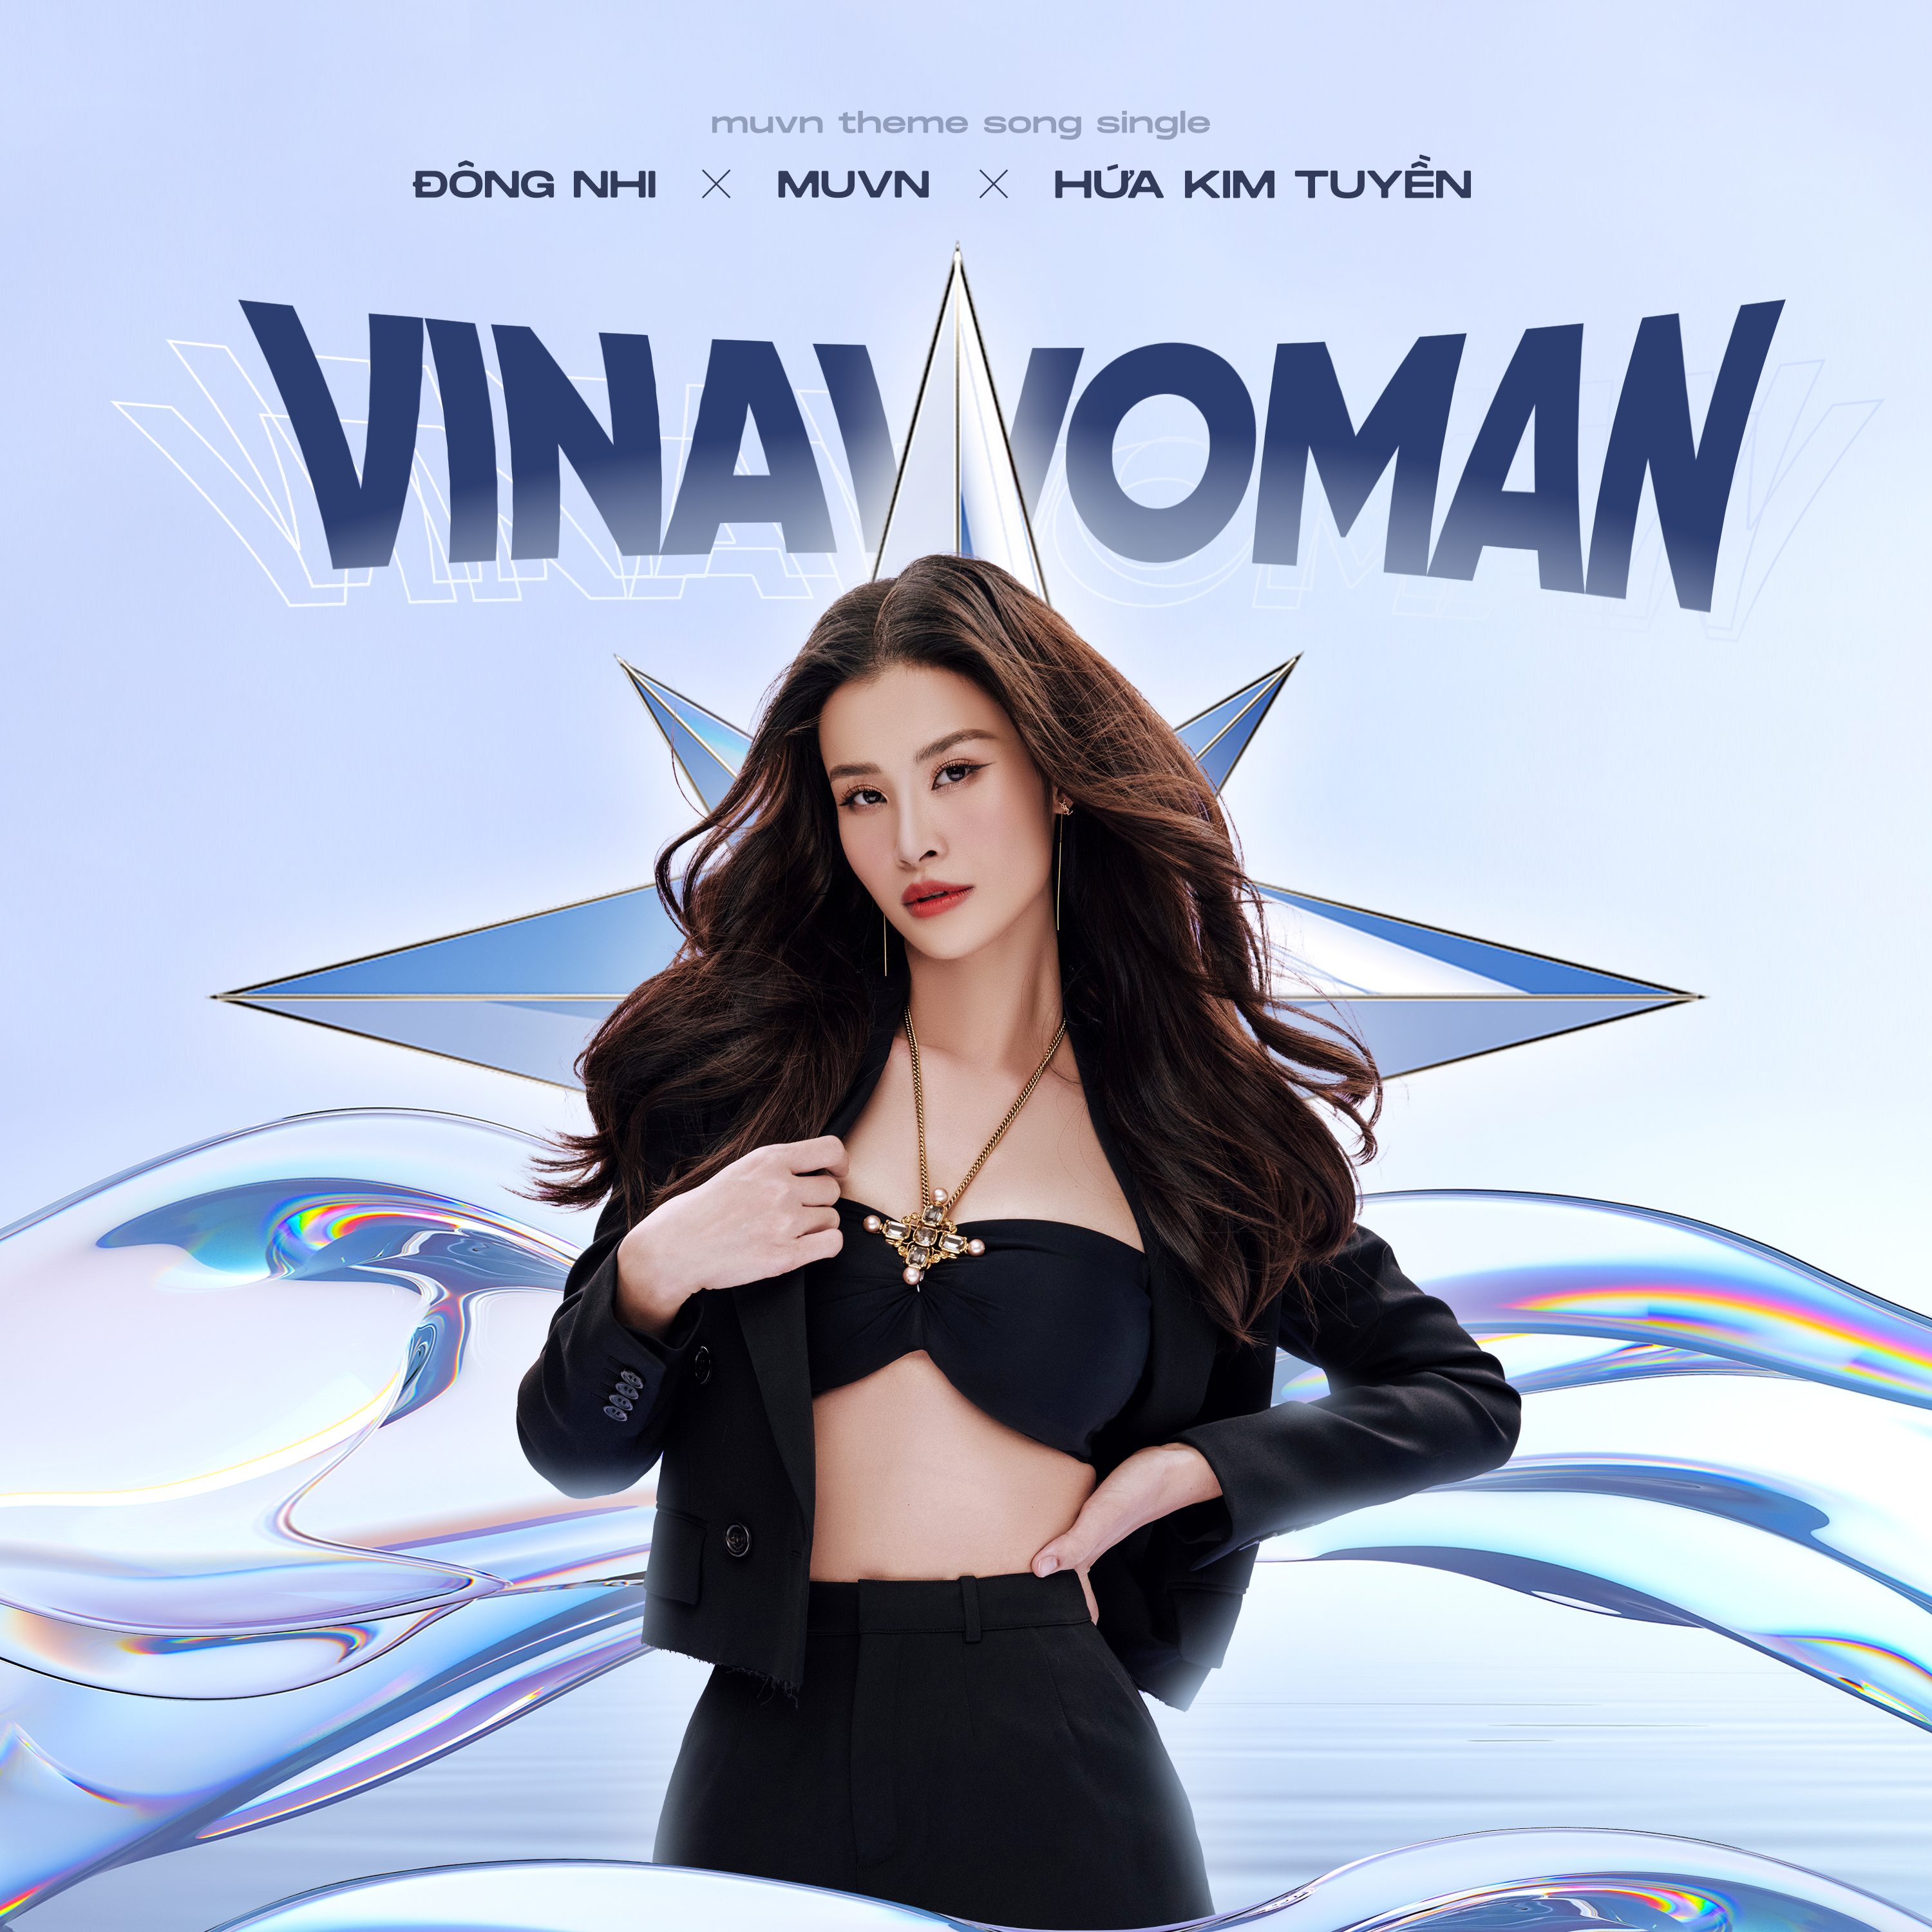 vinawoman-single-dongnhi-1651588213.png